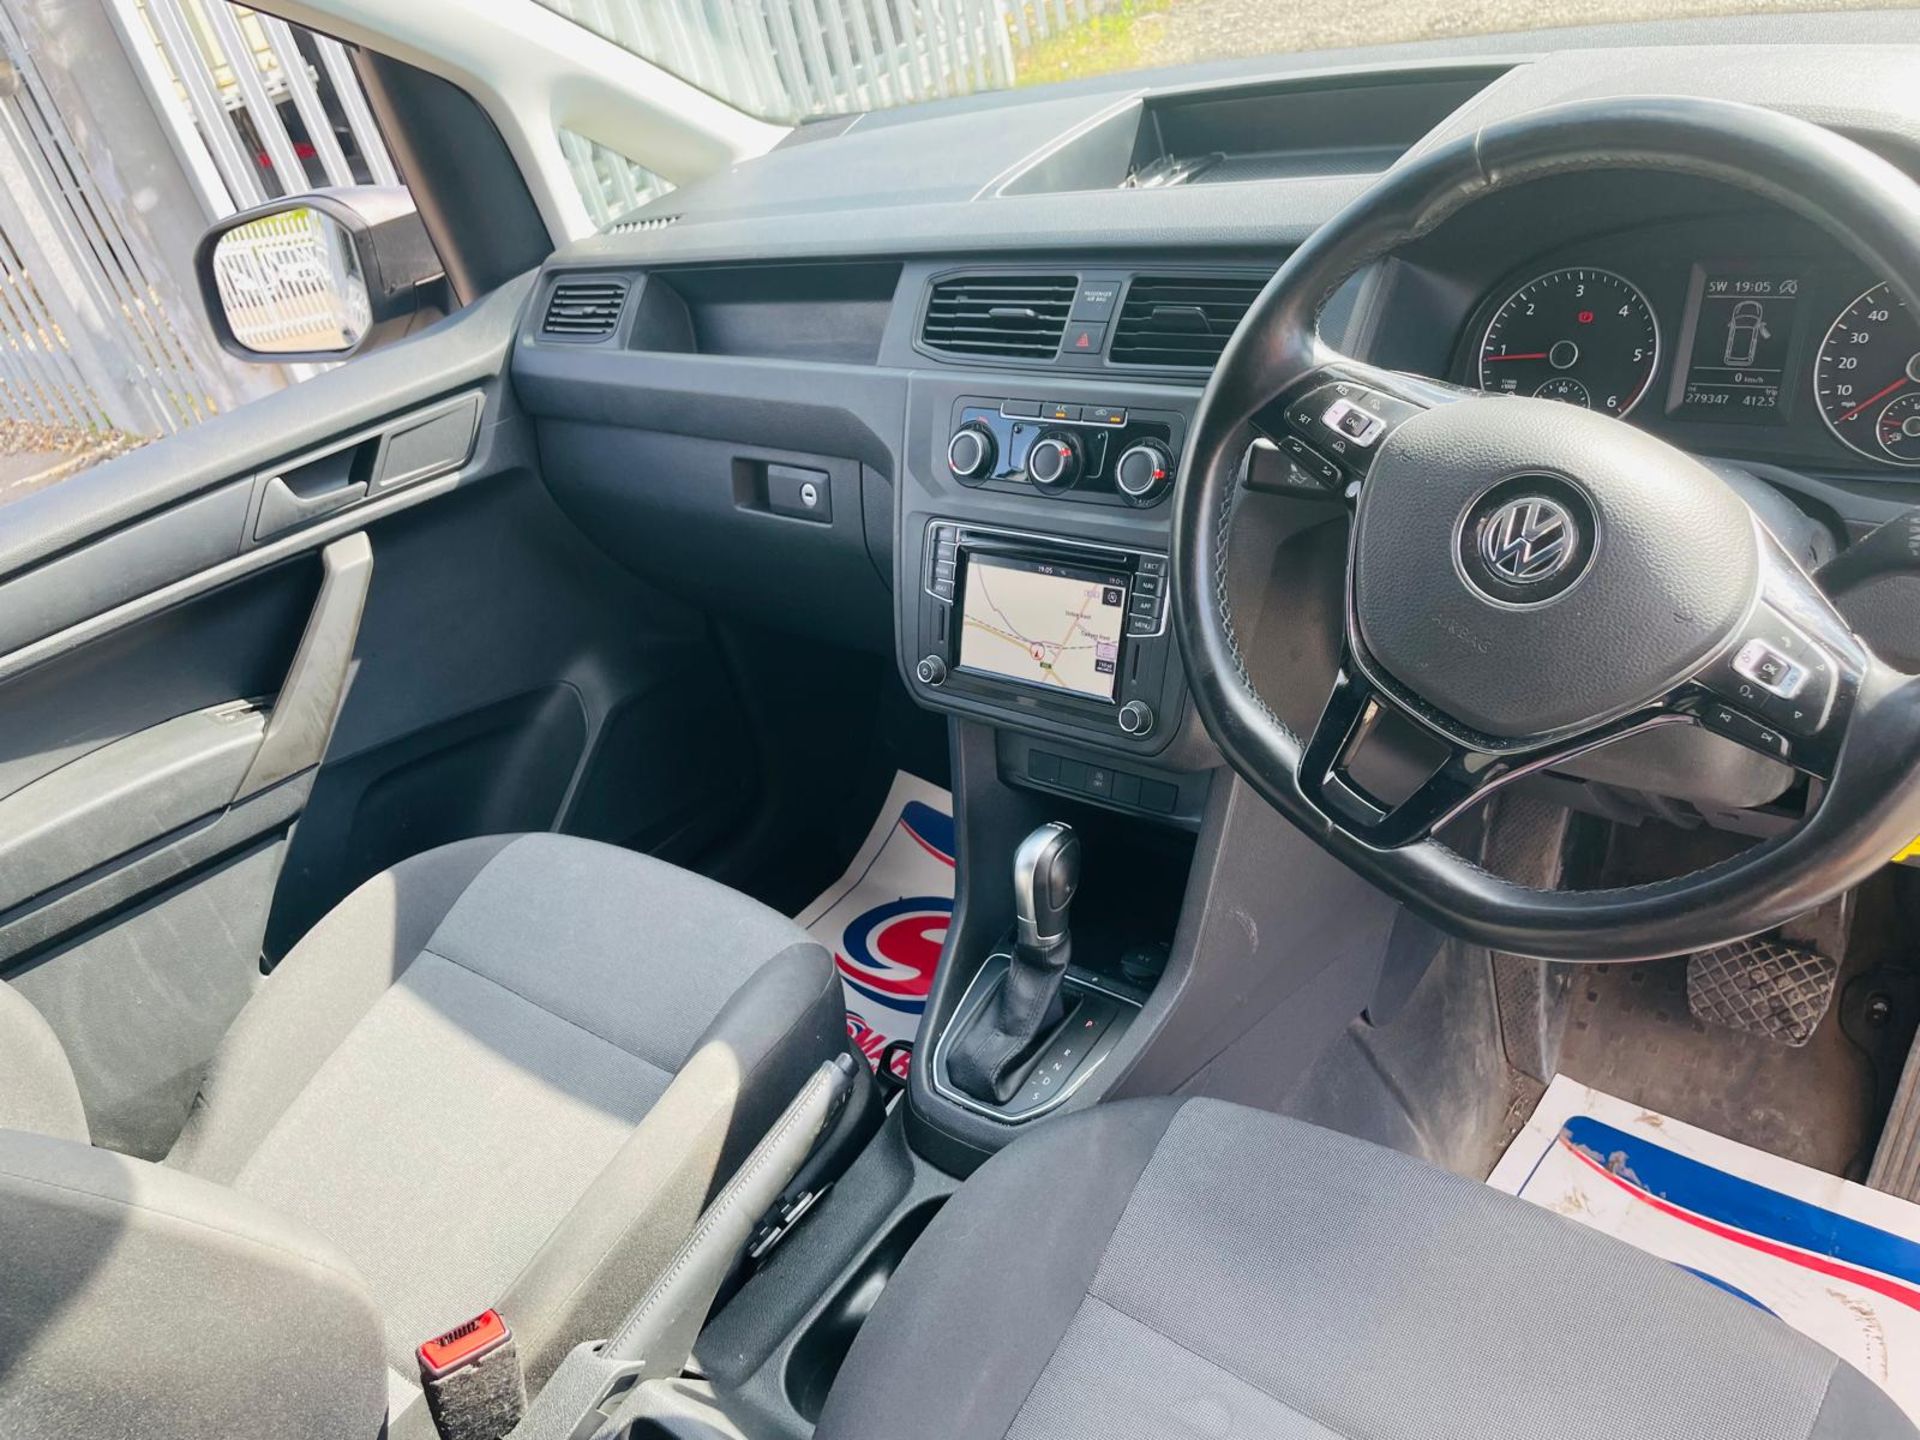 ** ON SALE ** Volkswagen Caddy Maxi C20 2.0 TDI 102 Startline Business-Long Wheel Base-2020'69 Reg' - Image 20 of 28